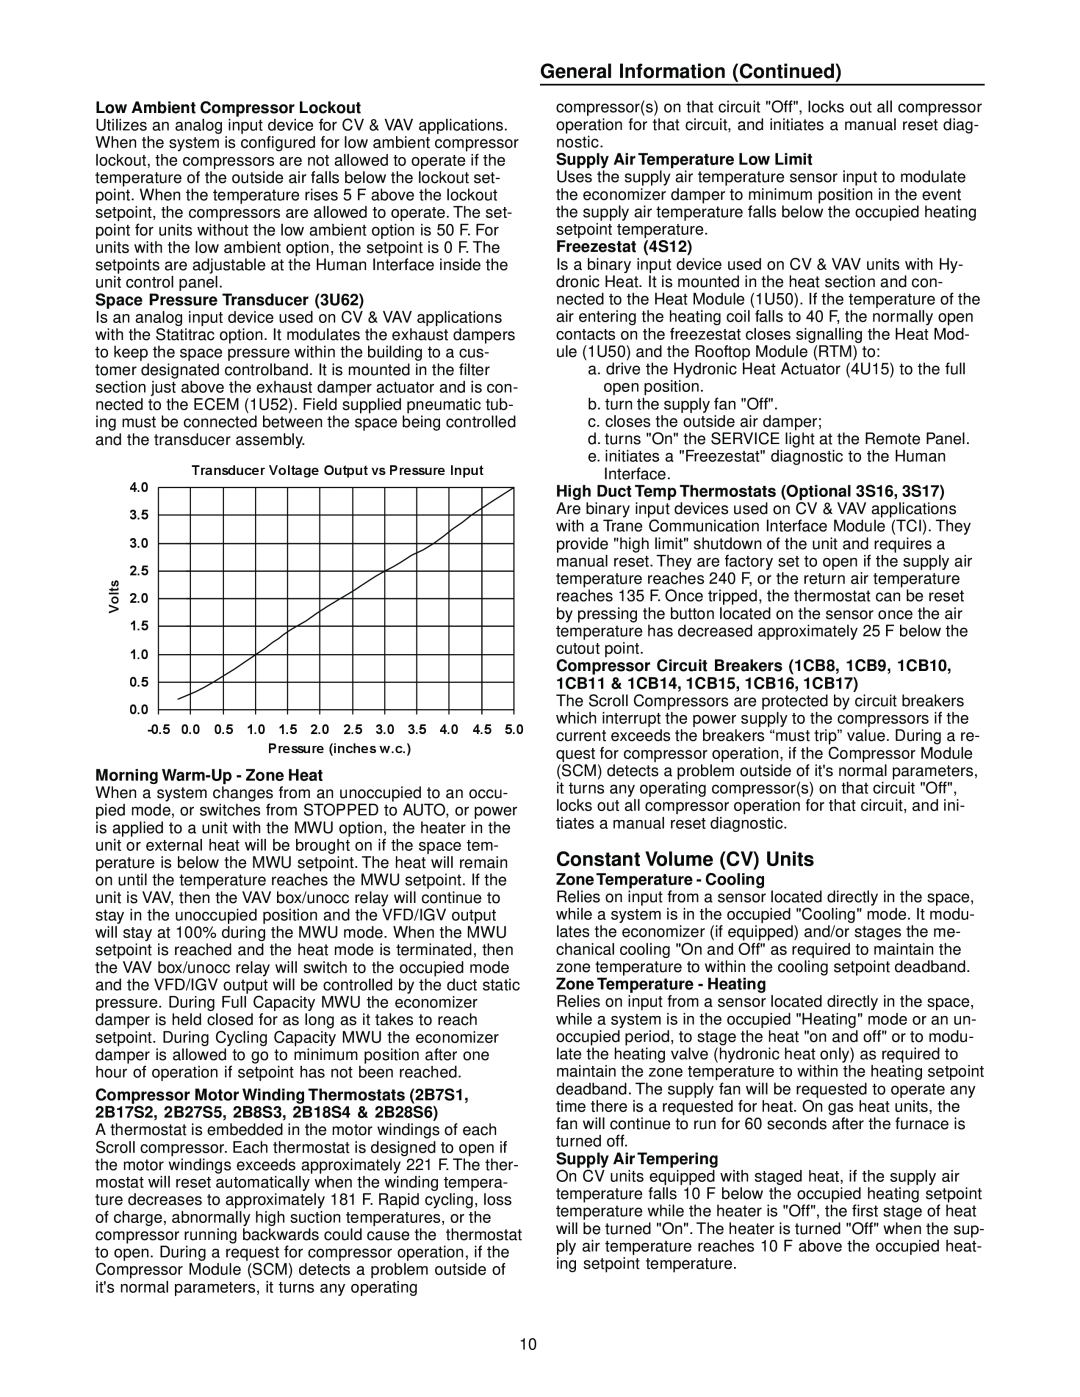 Trane RT-SVX10C-EN specifications Constant Volume CV Units, General Information Continued 